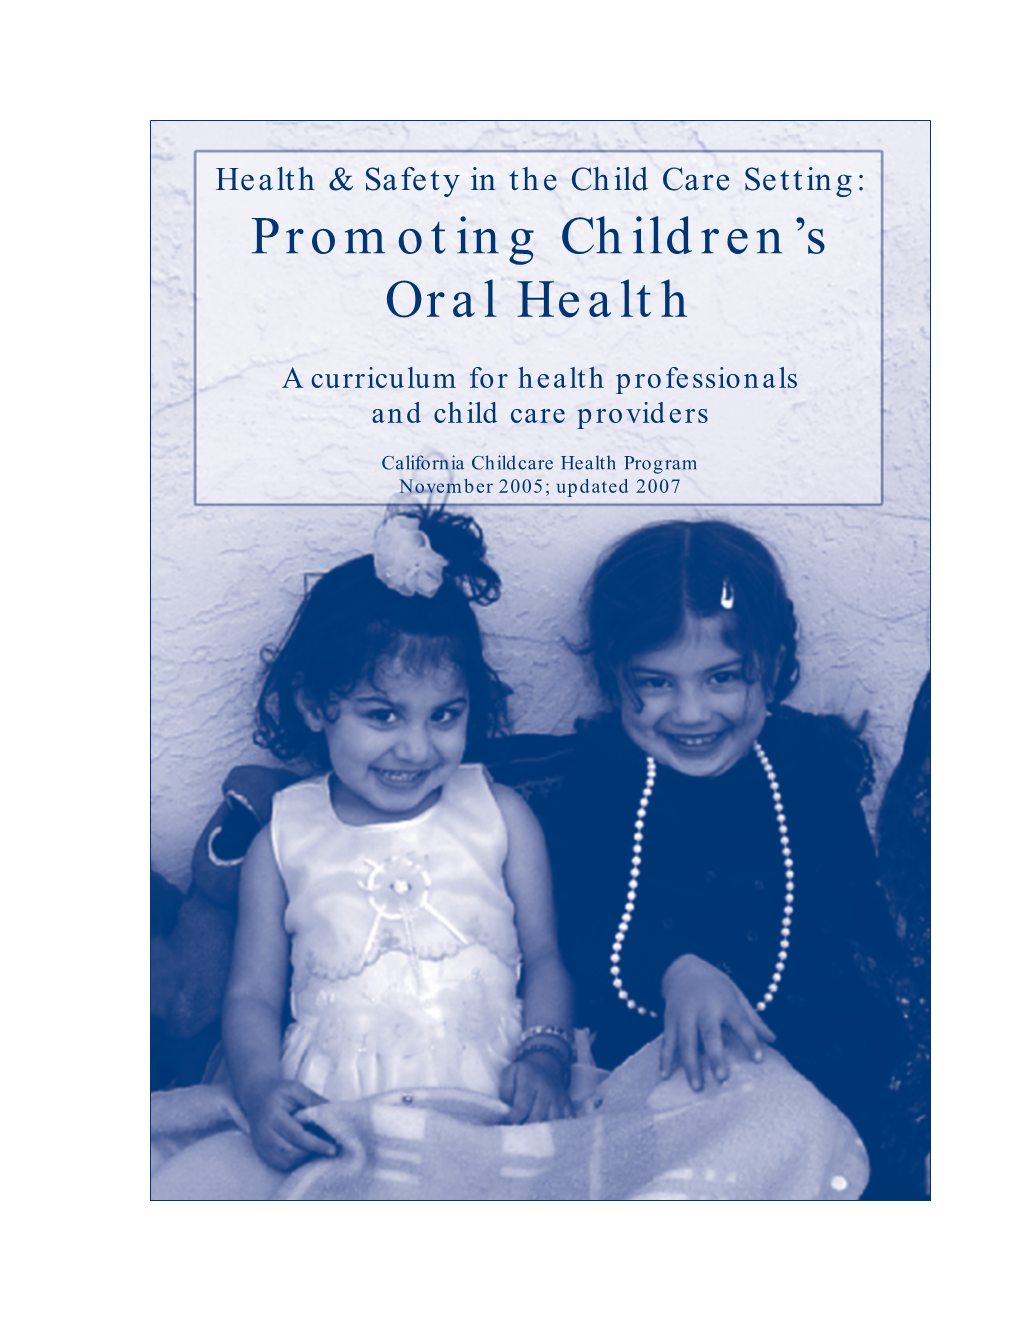 Promoting Children's Oral Health